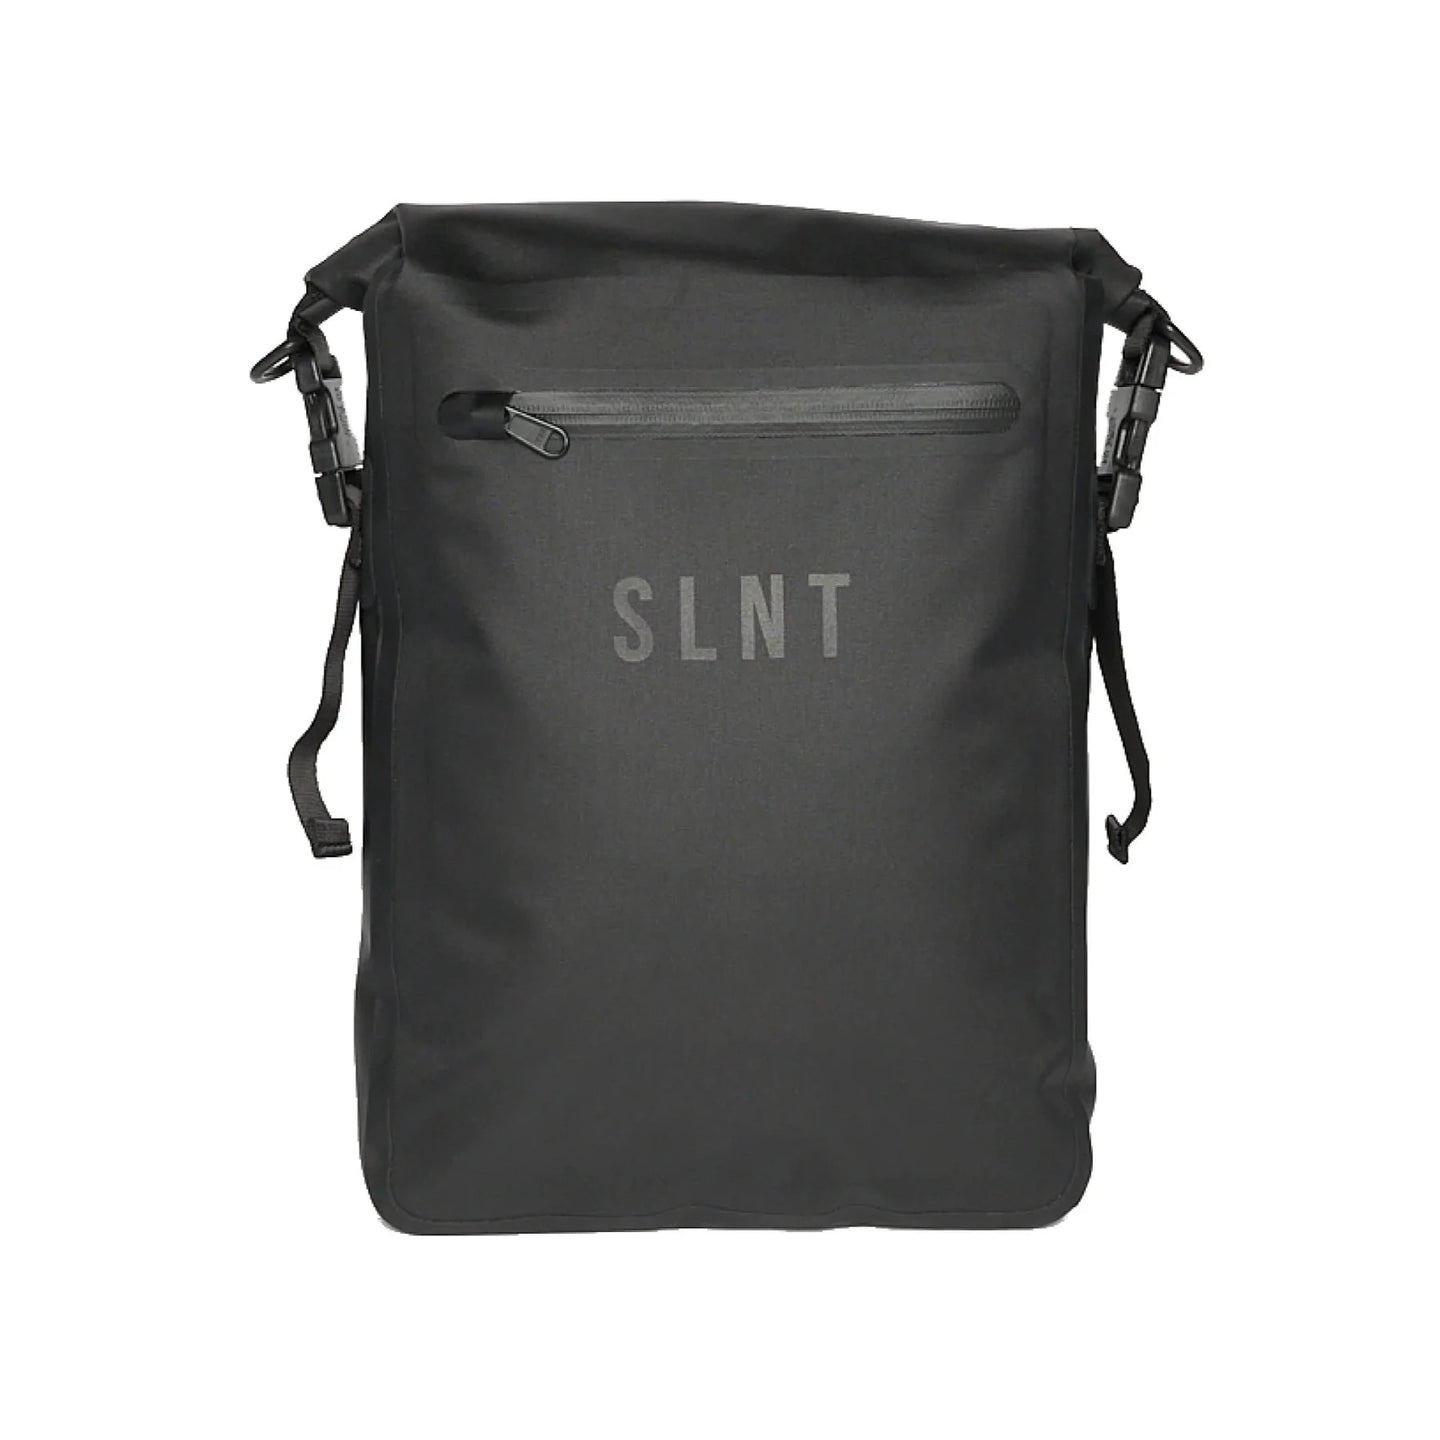 Why Use a Faraday Bag? - SLNT®